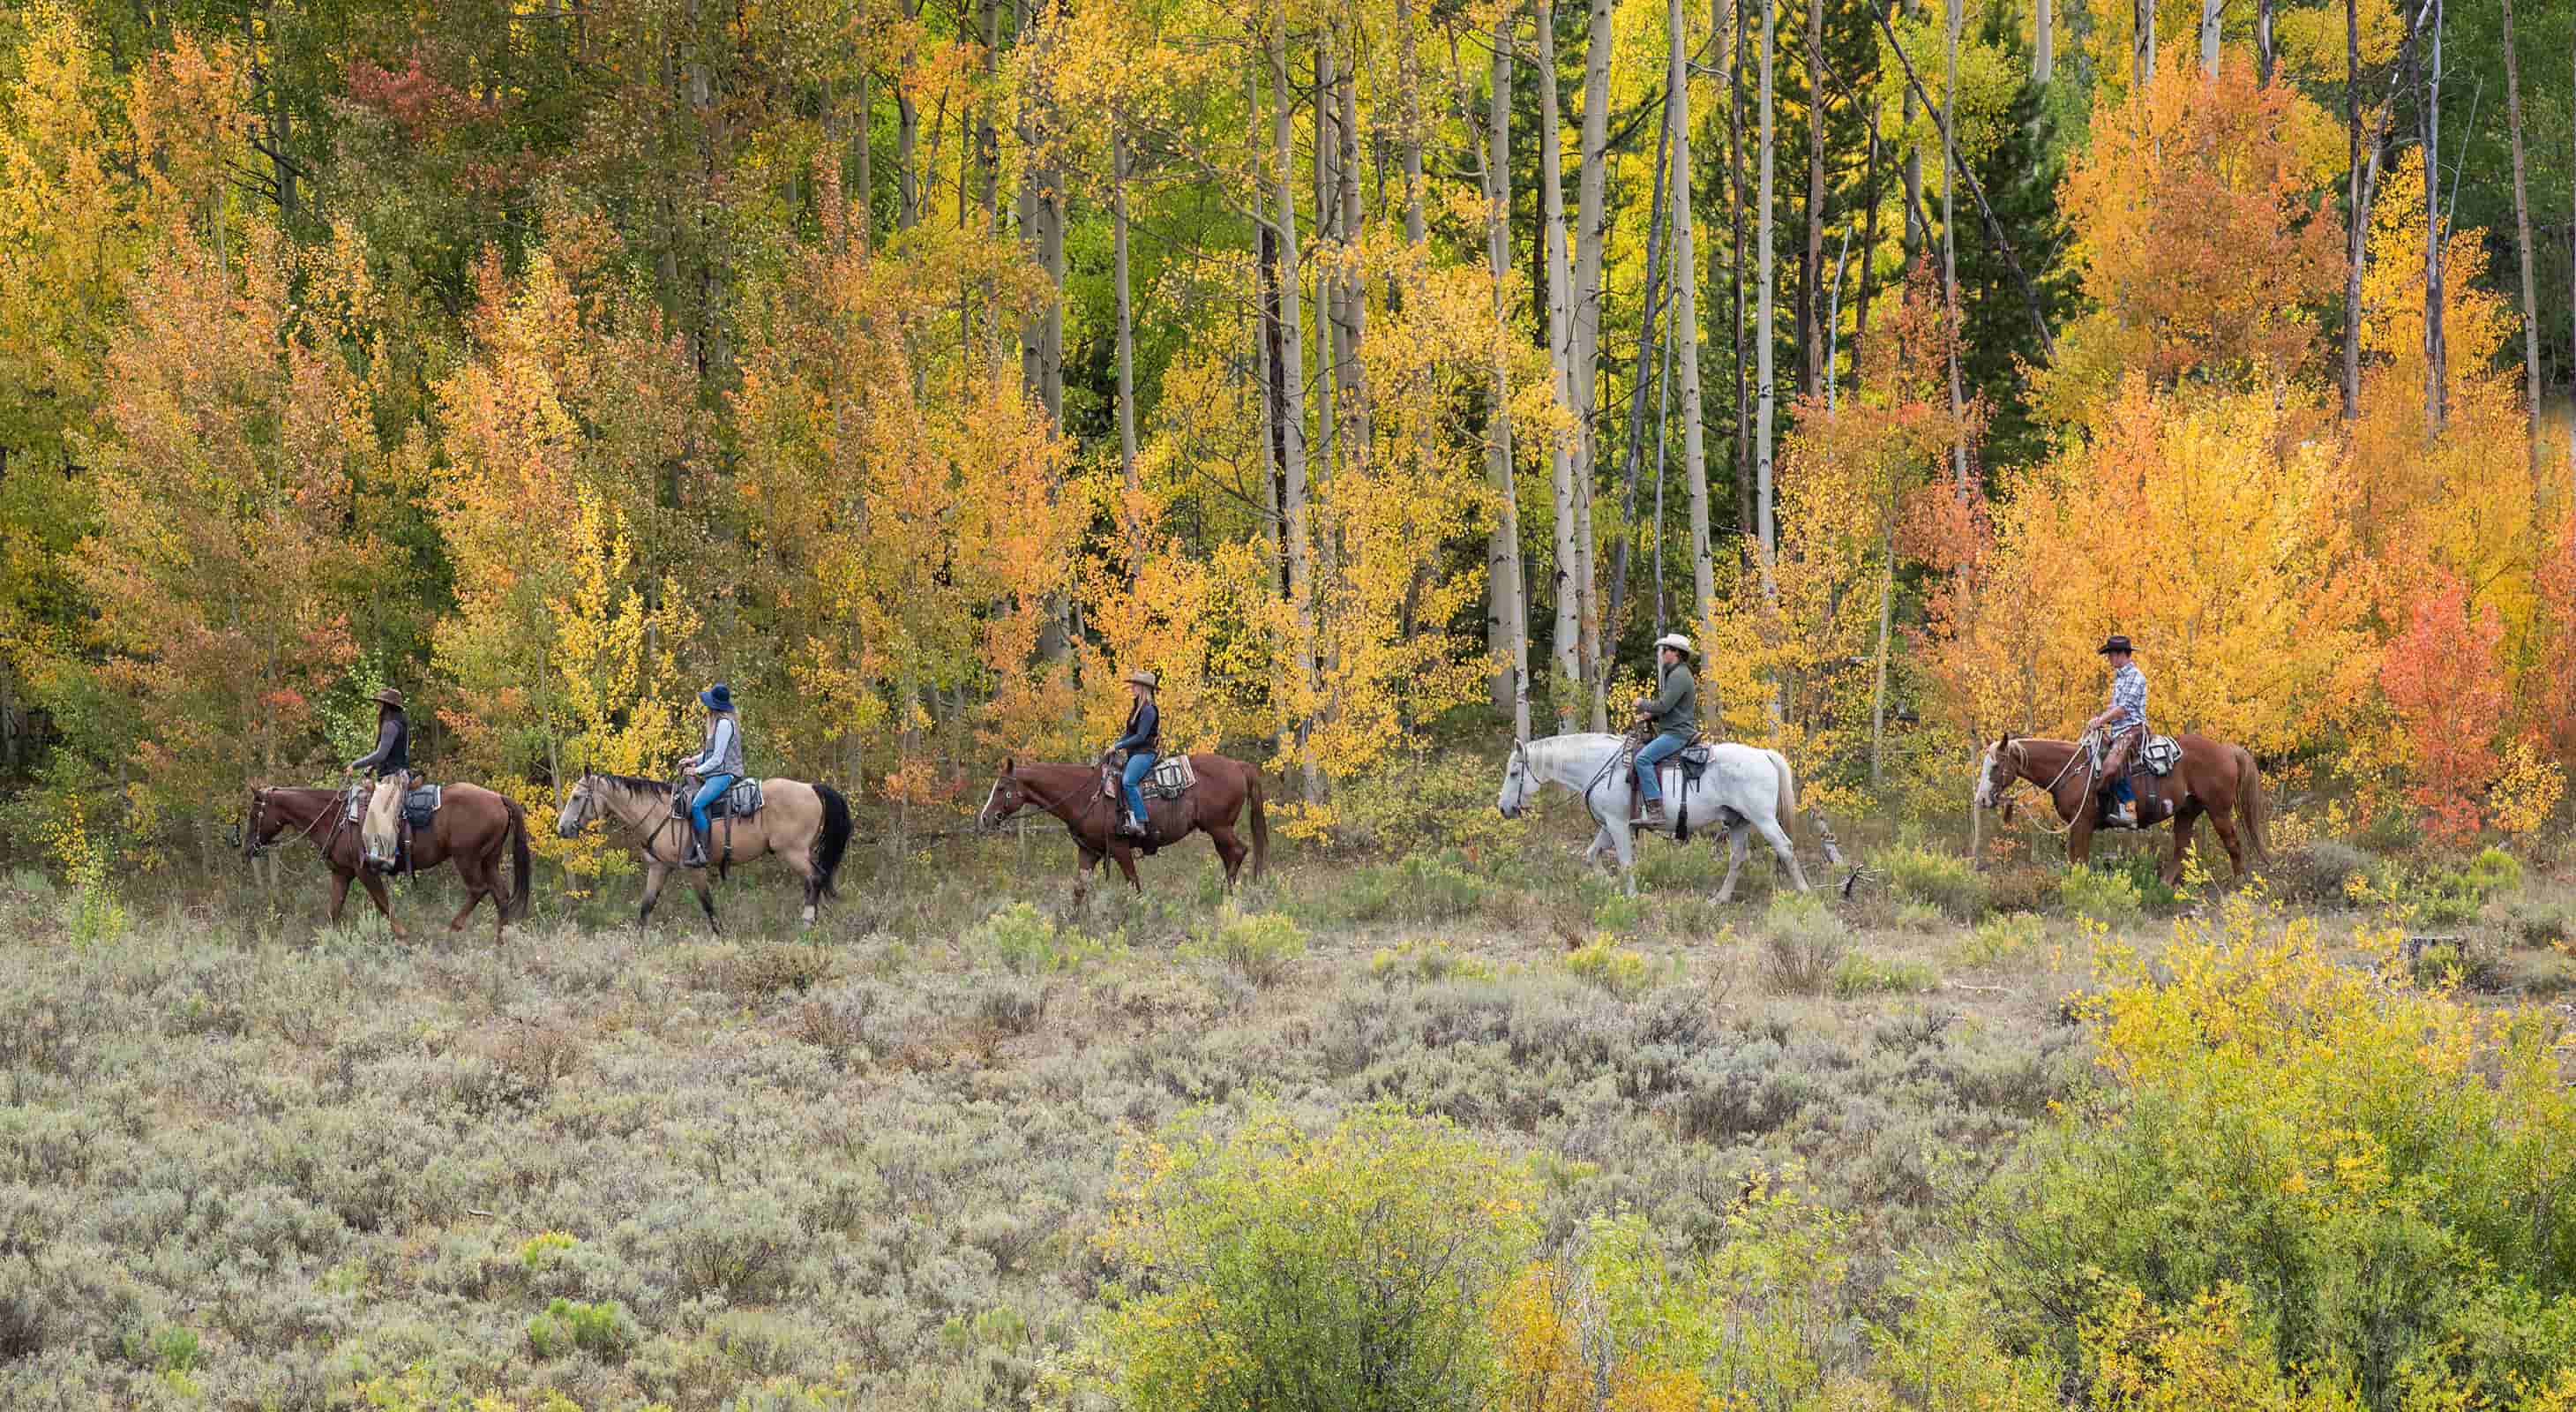 A group riding horses in the Colorado mountains